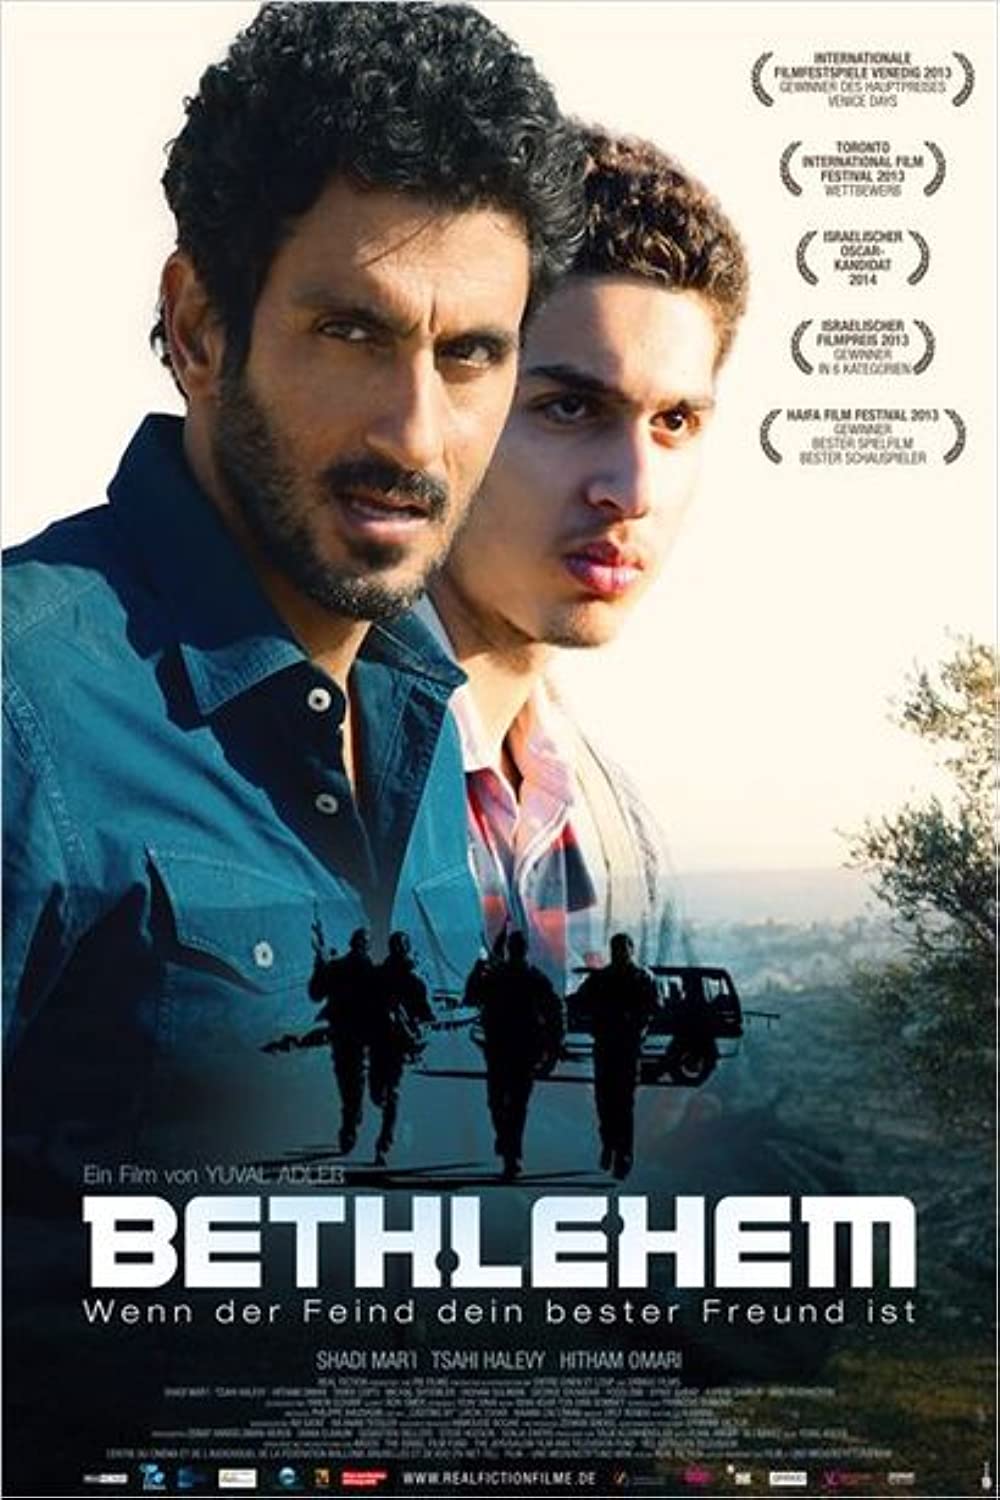 Filmbeschreibung zu Bethlehem